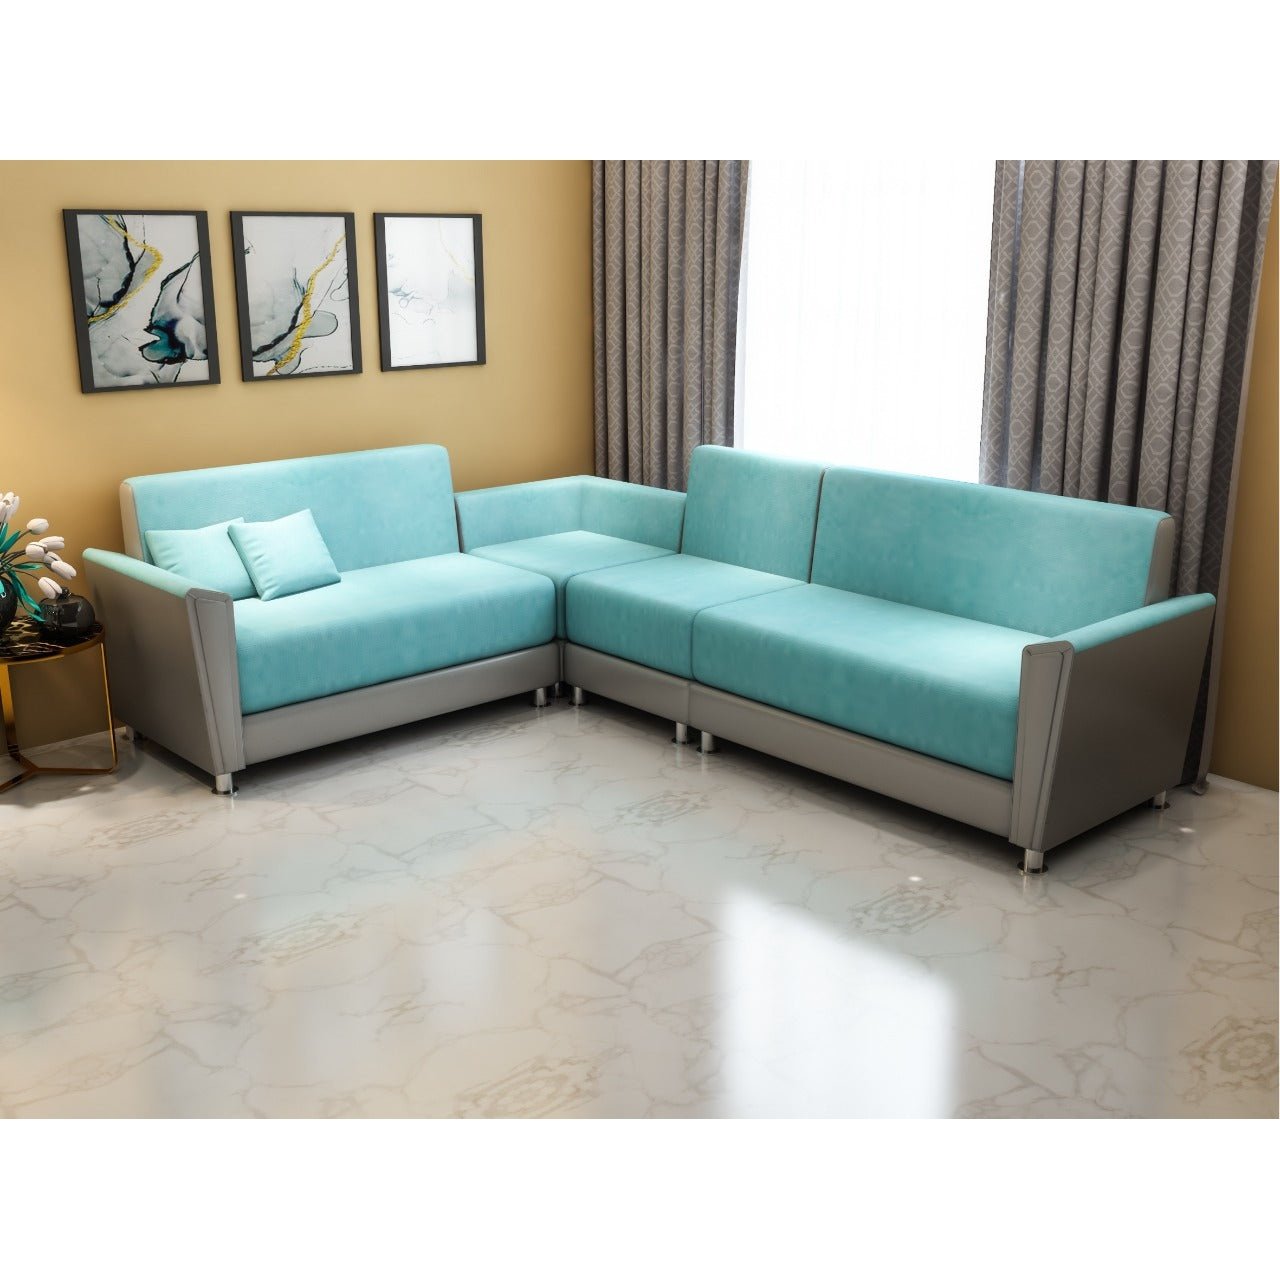 VR-162,RIVALTO L SHAPE SOFA SET Mobel Furniture